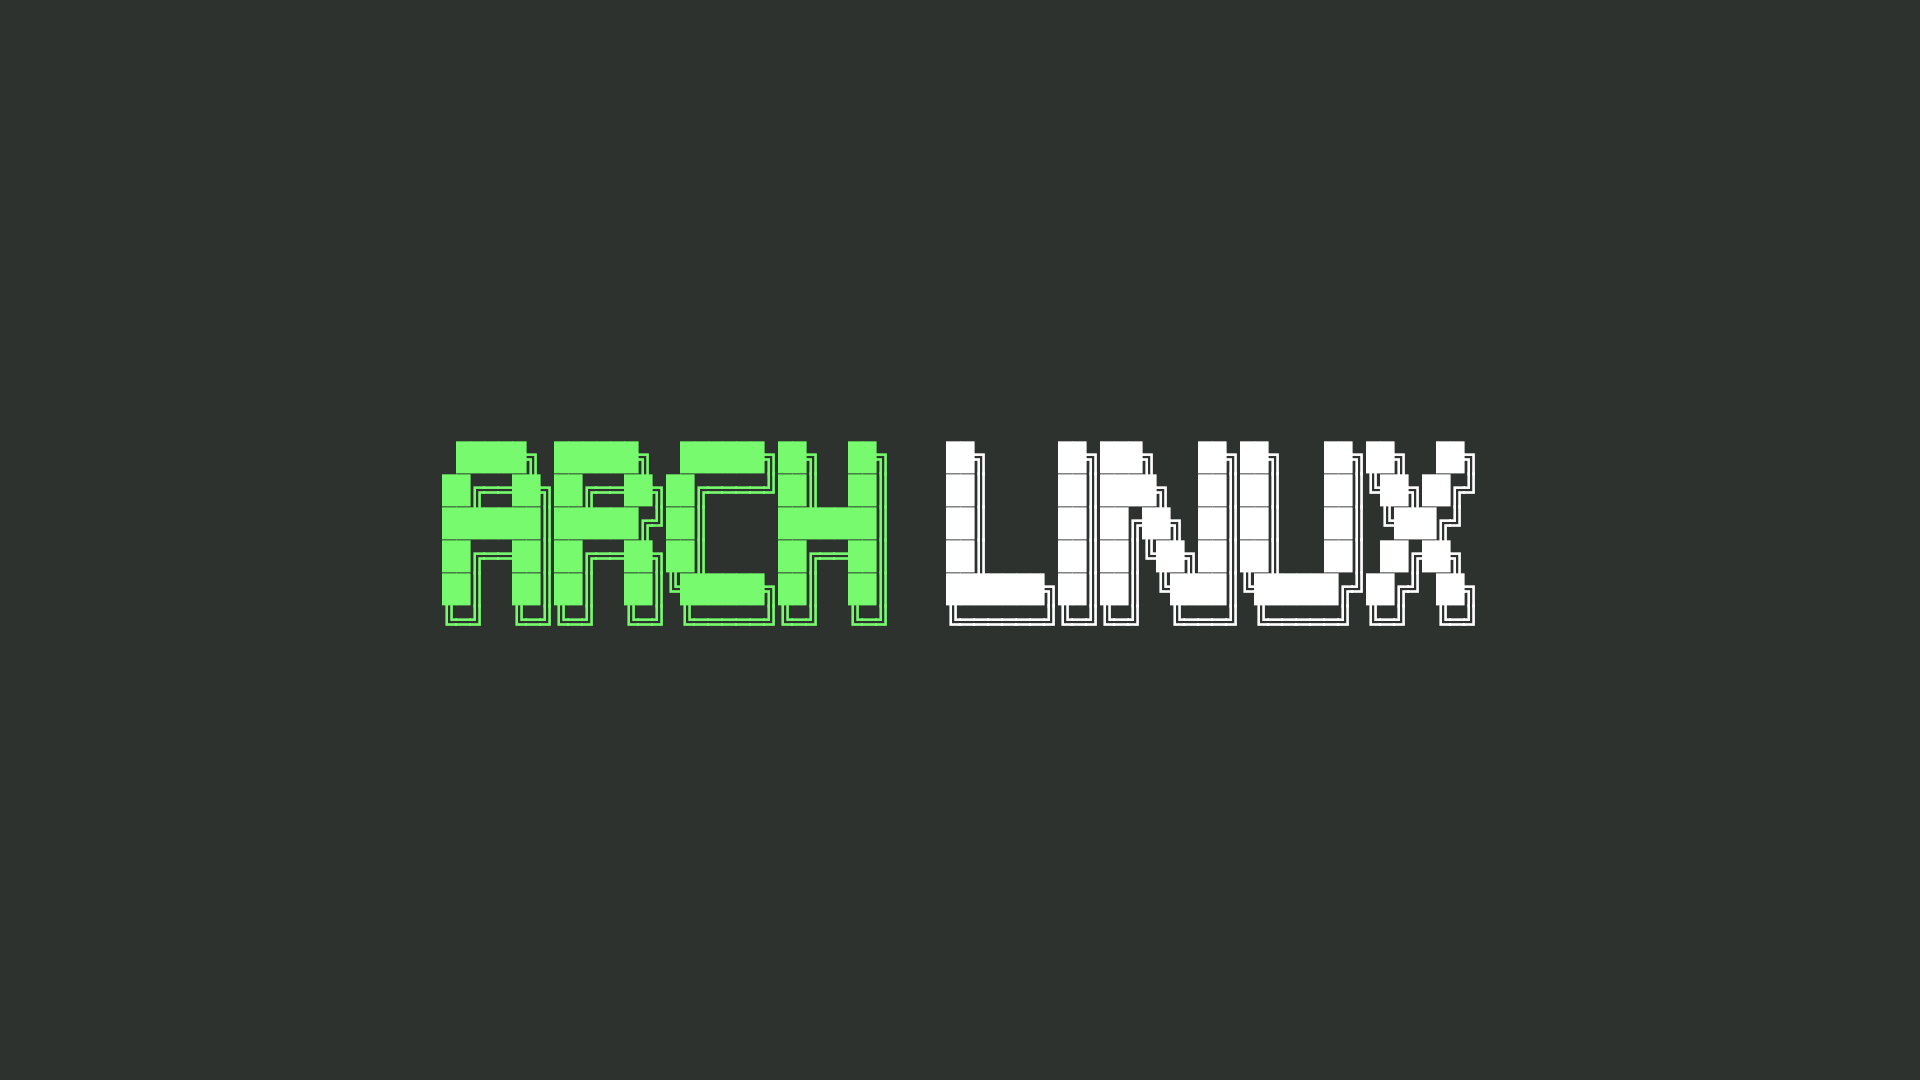 General 1920x1080 Arch Linux ASCII art green simple background digital art terminal minimalism